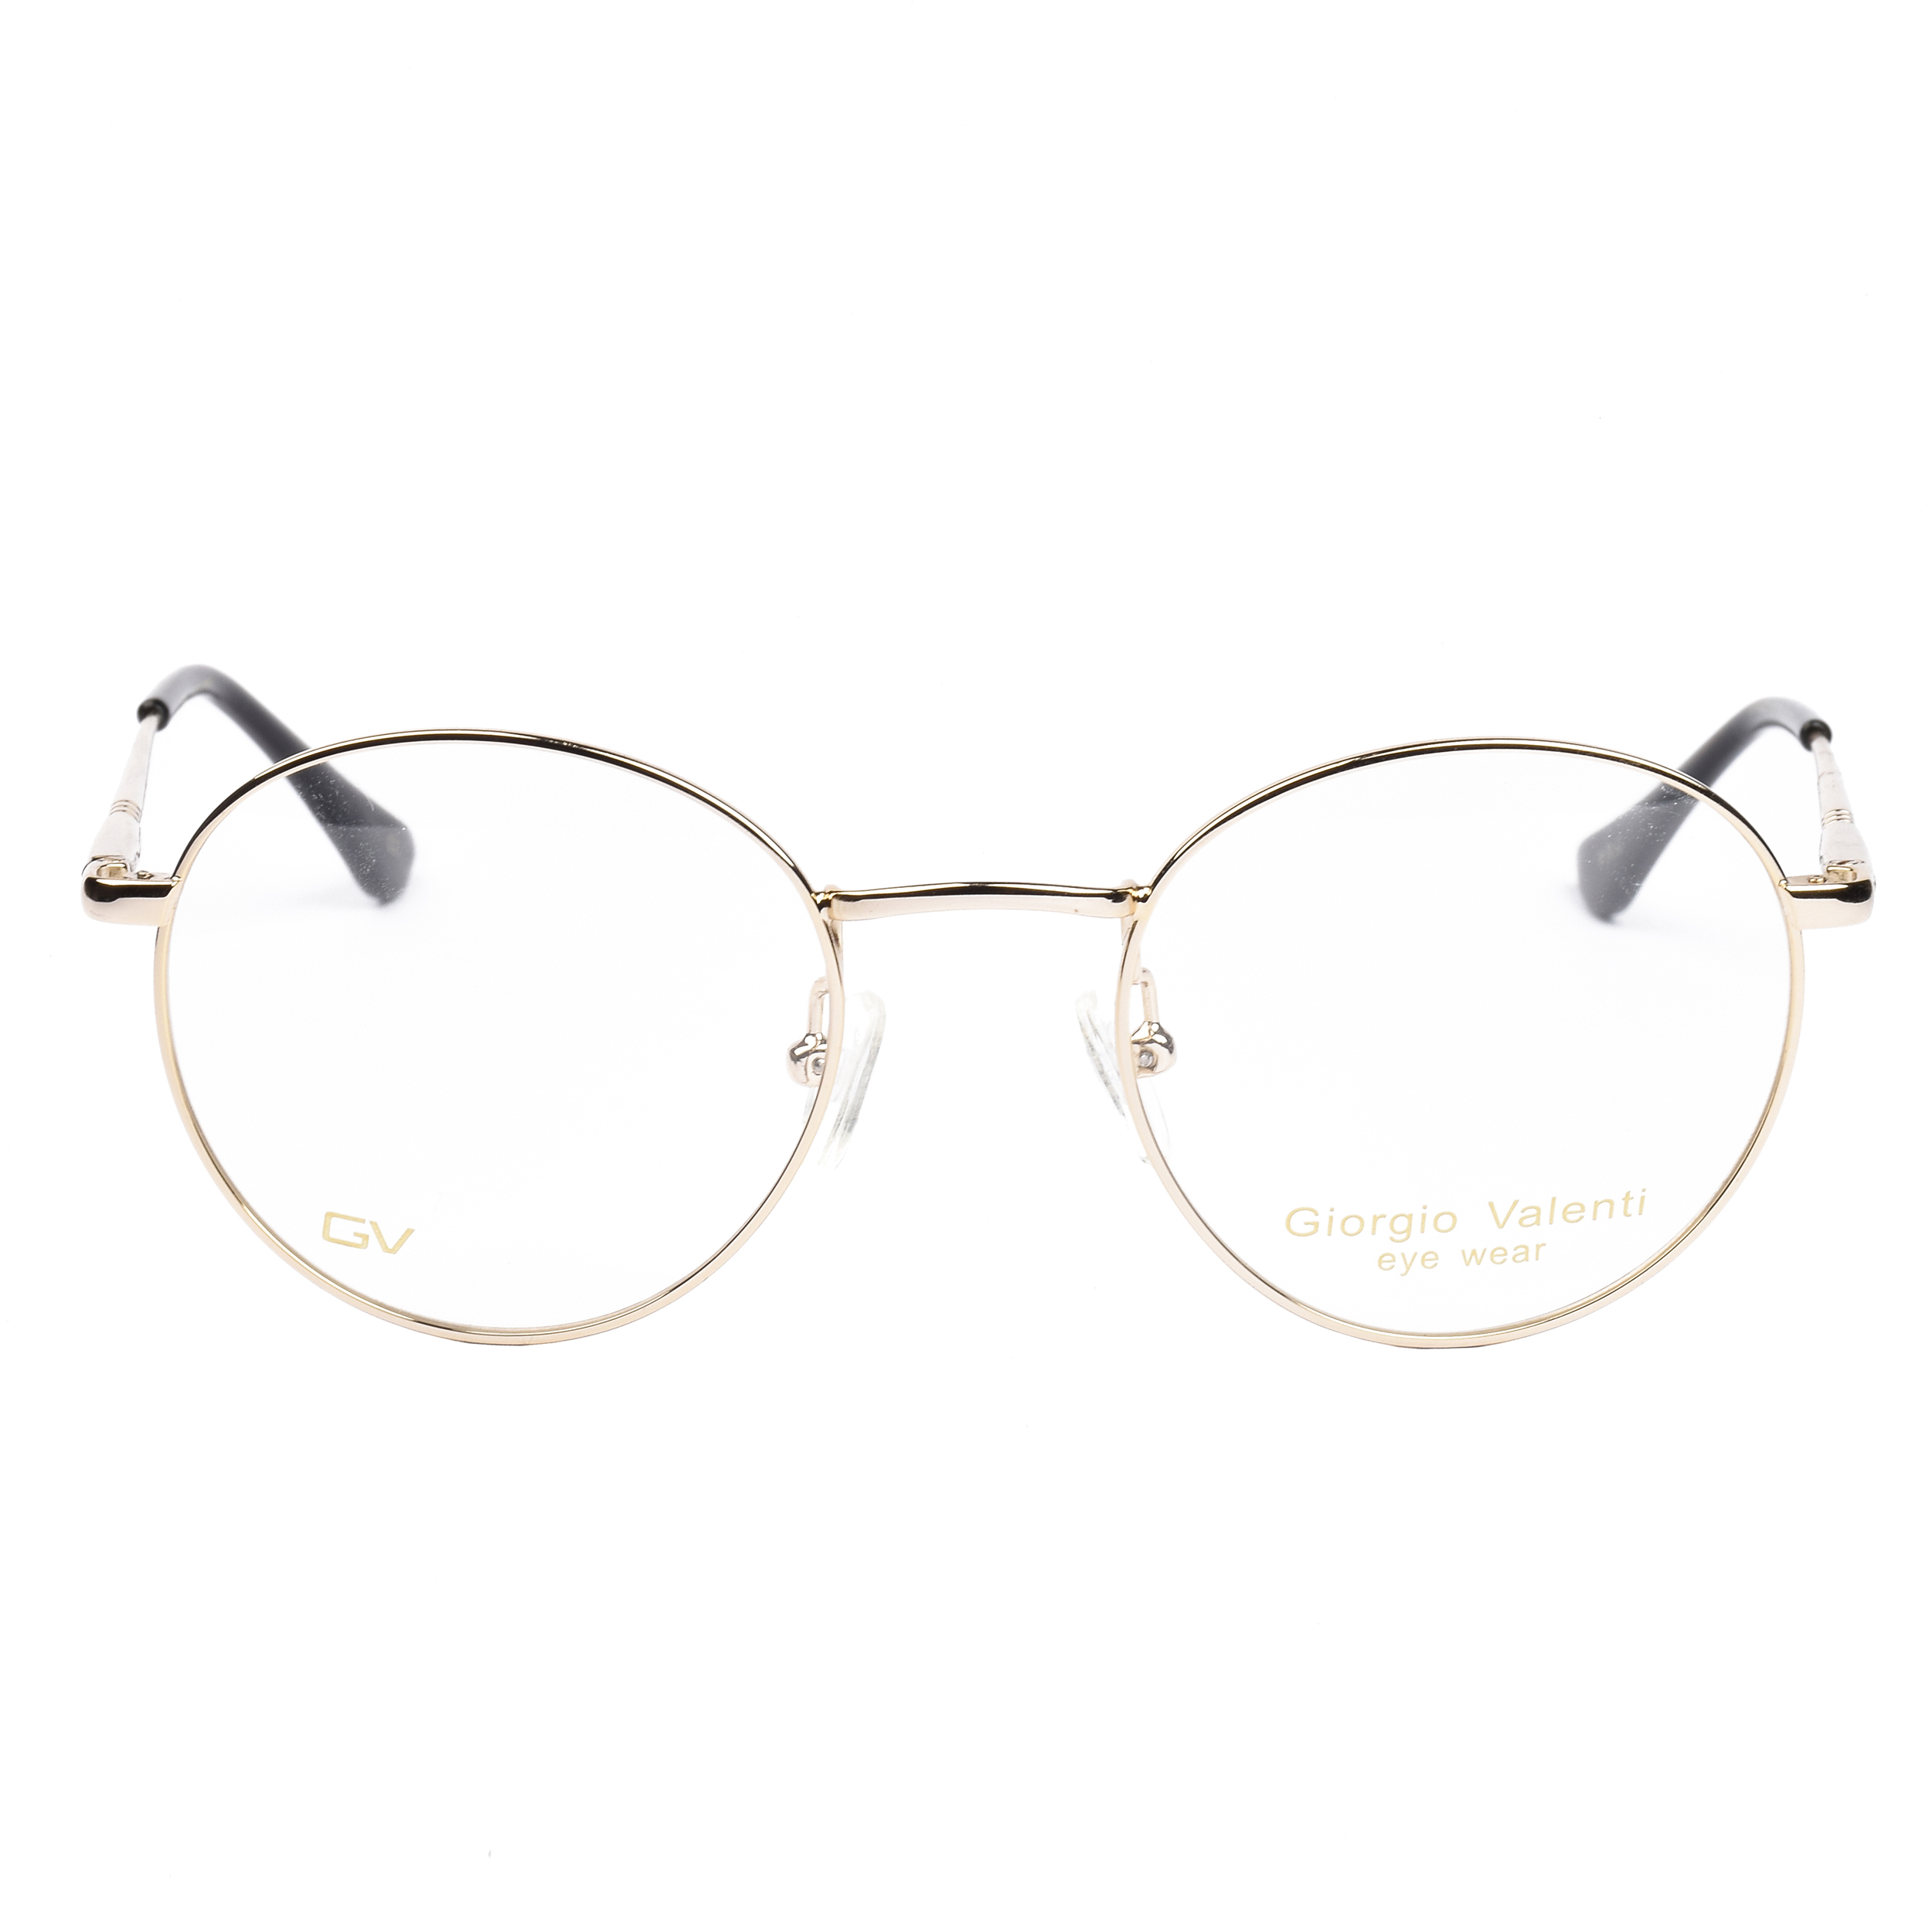 فریم عینک طبی جورجیو والنتی مدل 4400